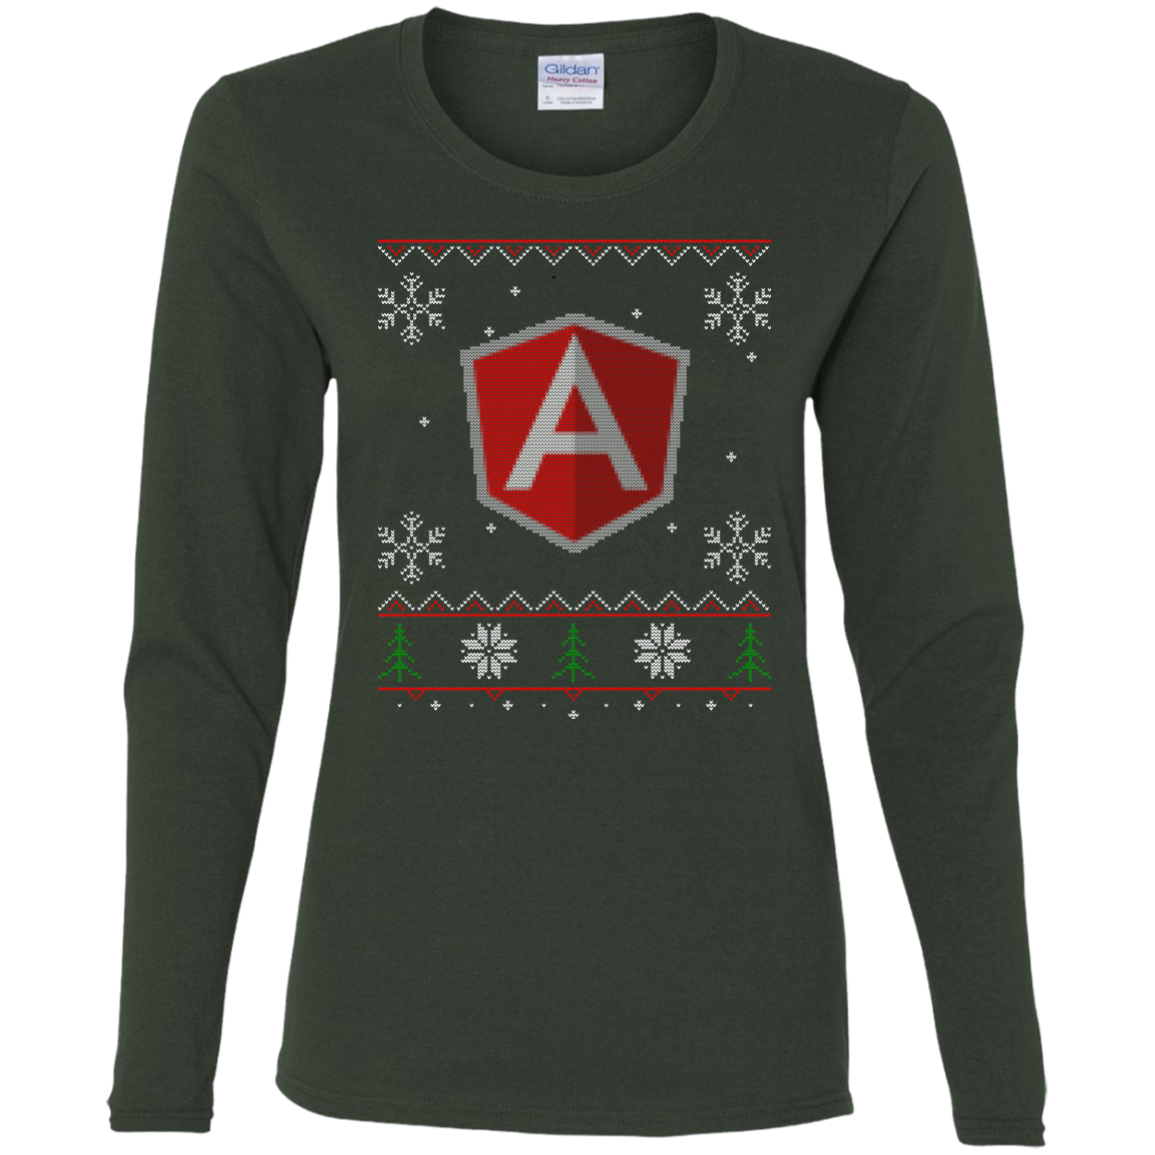 AngularJS Programming Ugly Sweater Women's Long Sleeve Christmas Holiday Shirt - Bitcoin & Bunk